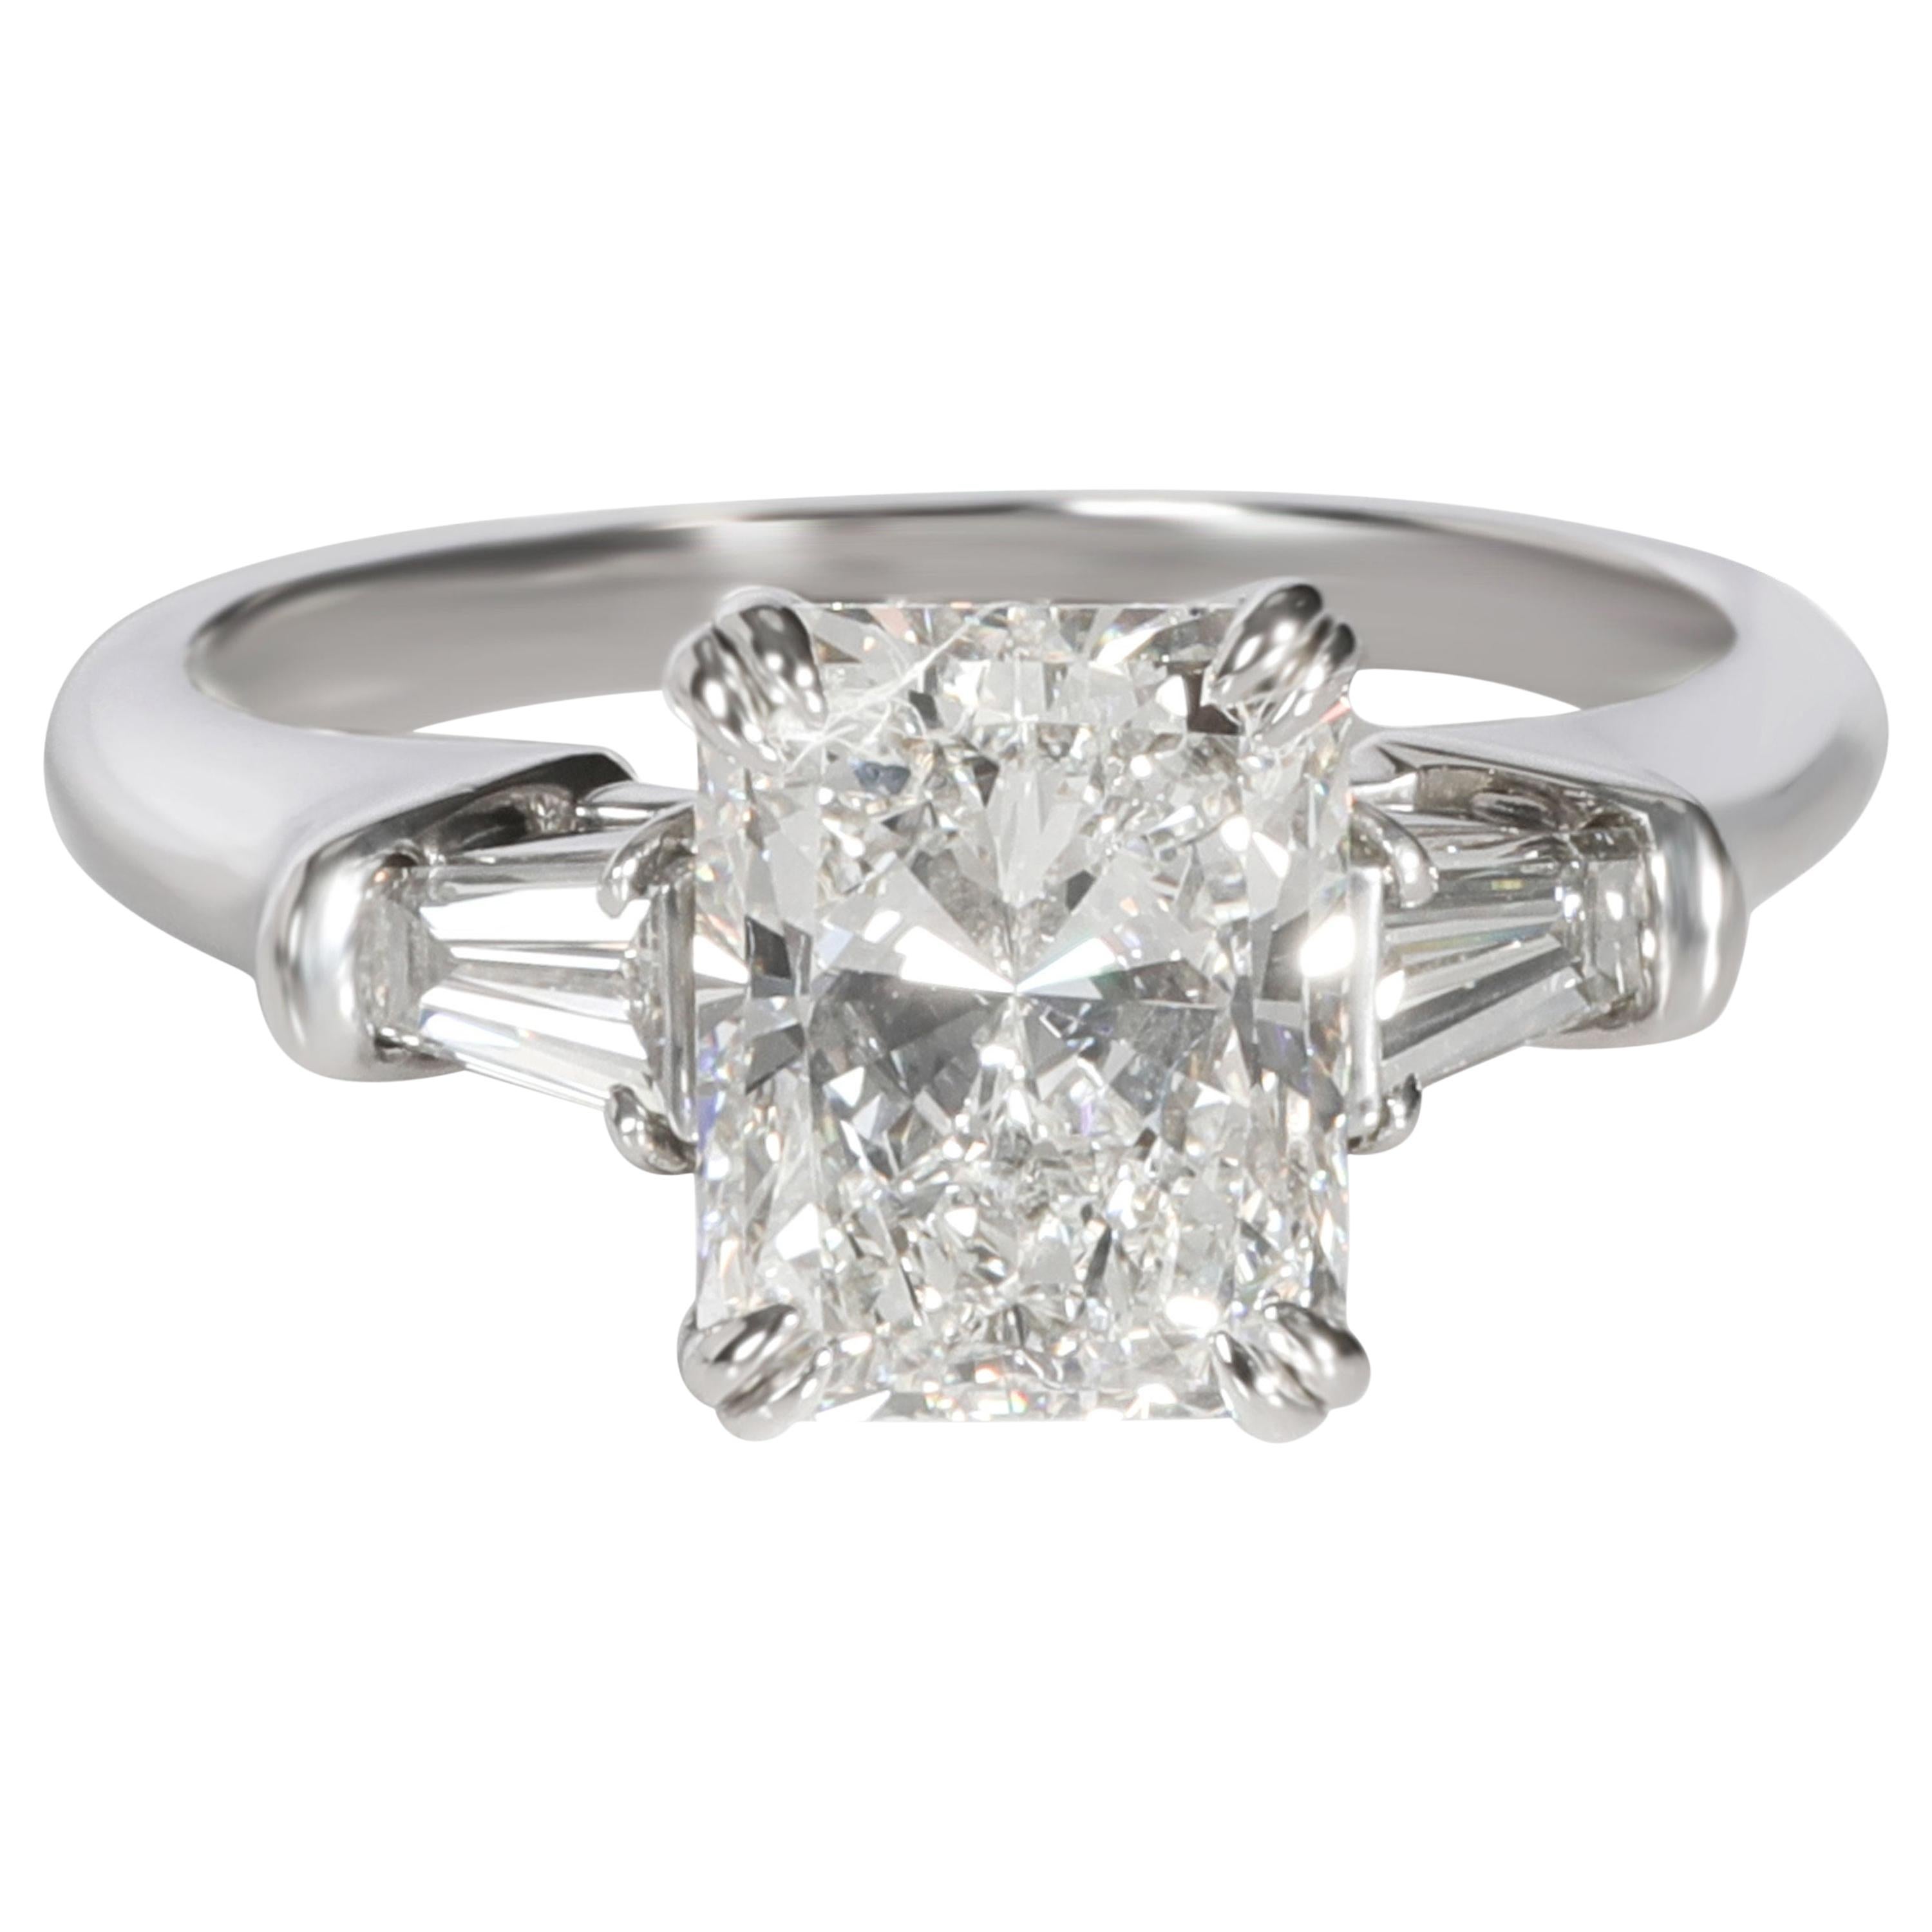 Harry Winston Radiant Diamond Engagement Ring in Platinum GIA F VVS1 2.41 Carat